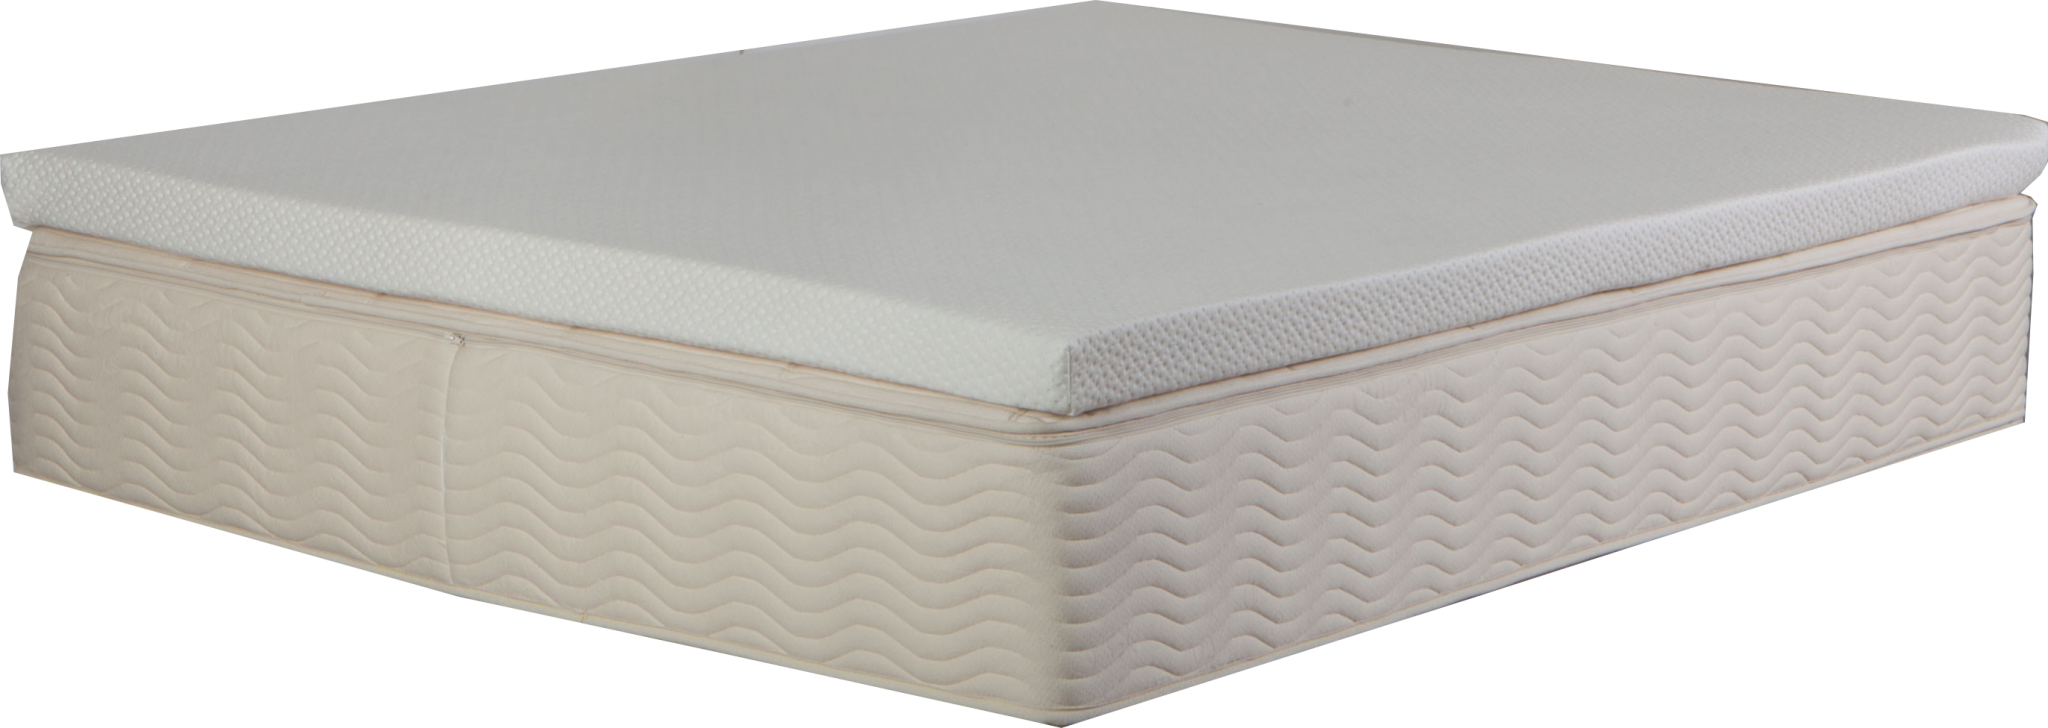 custom latex mattress toppers